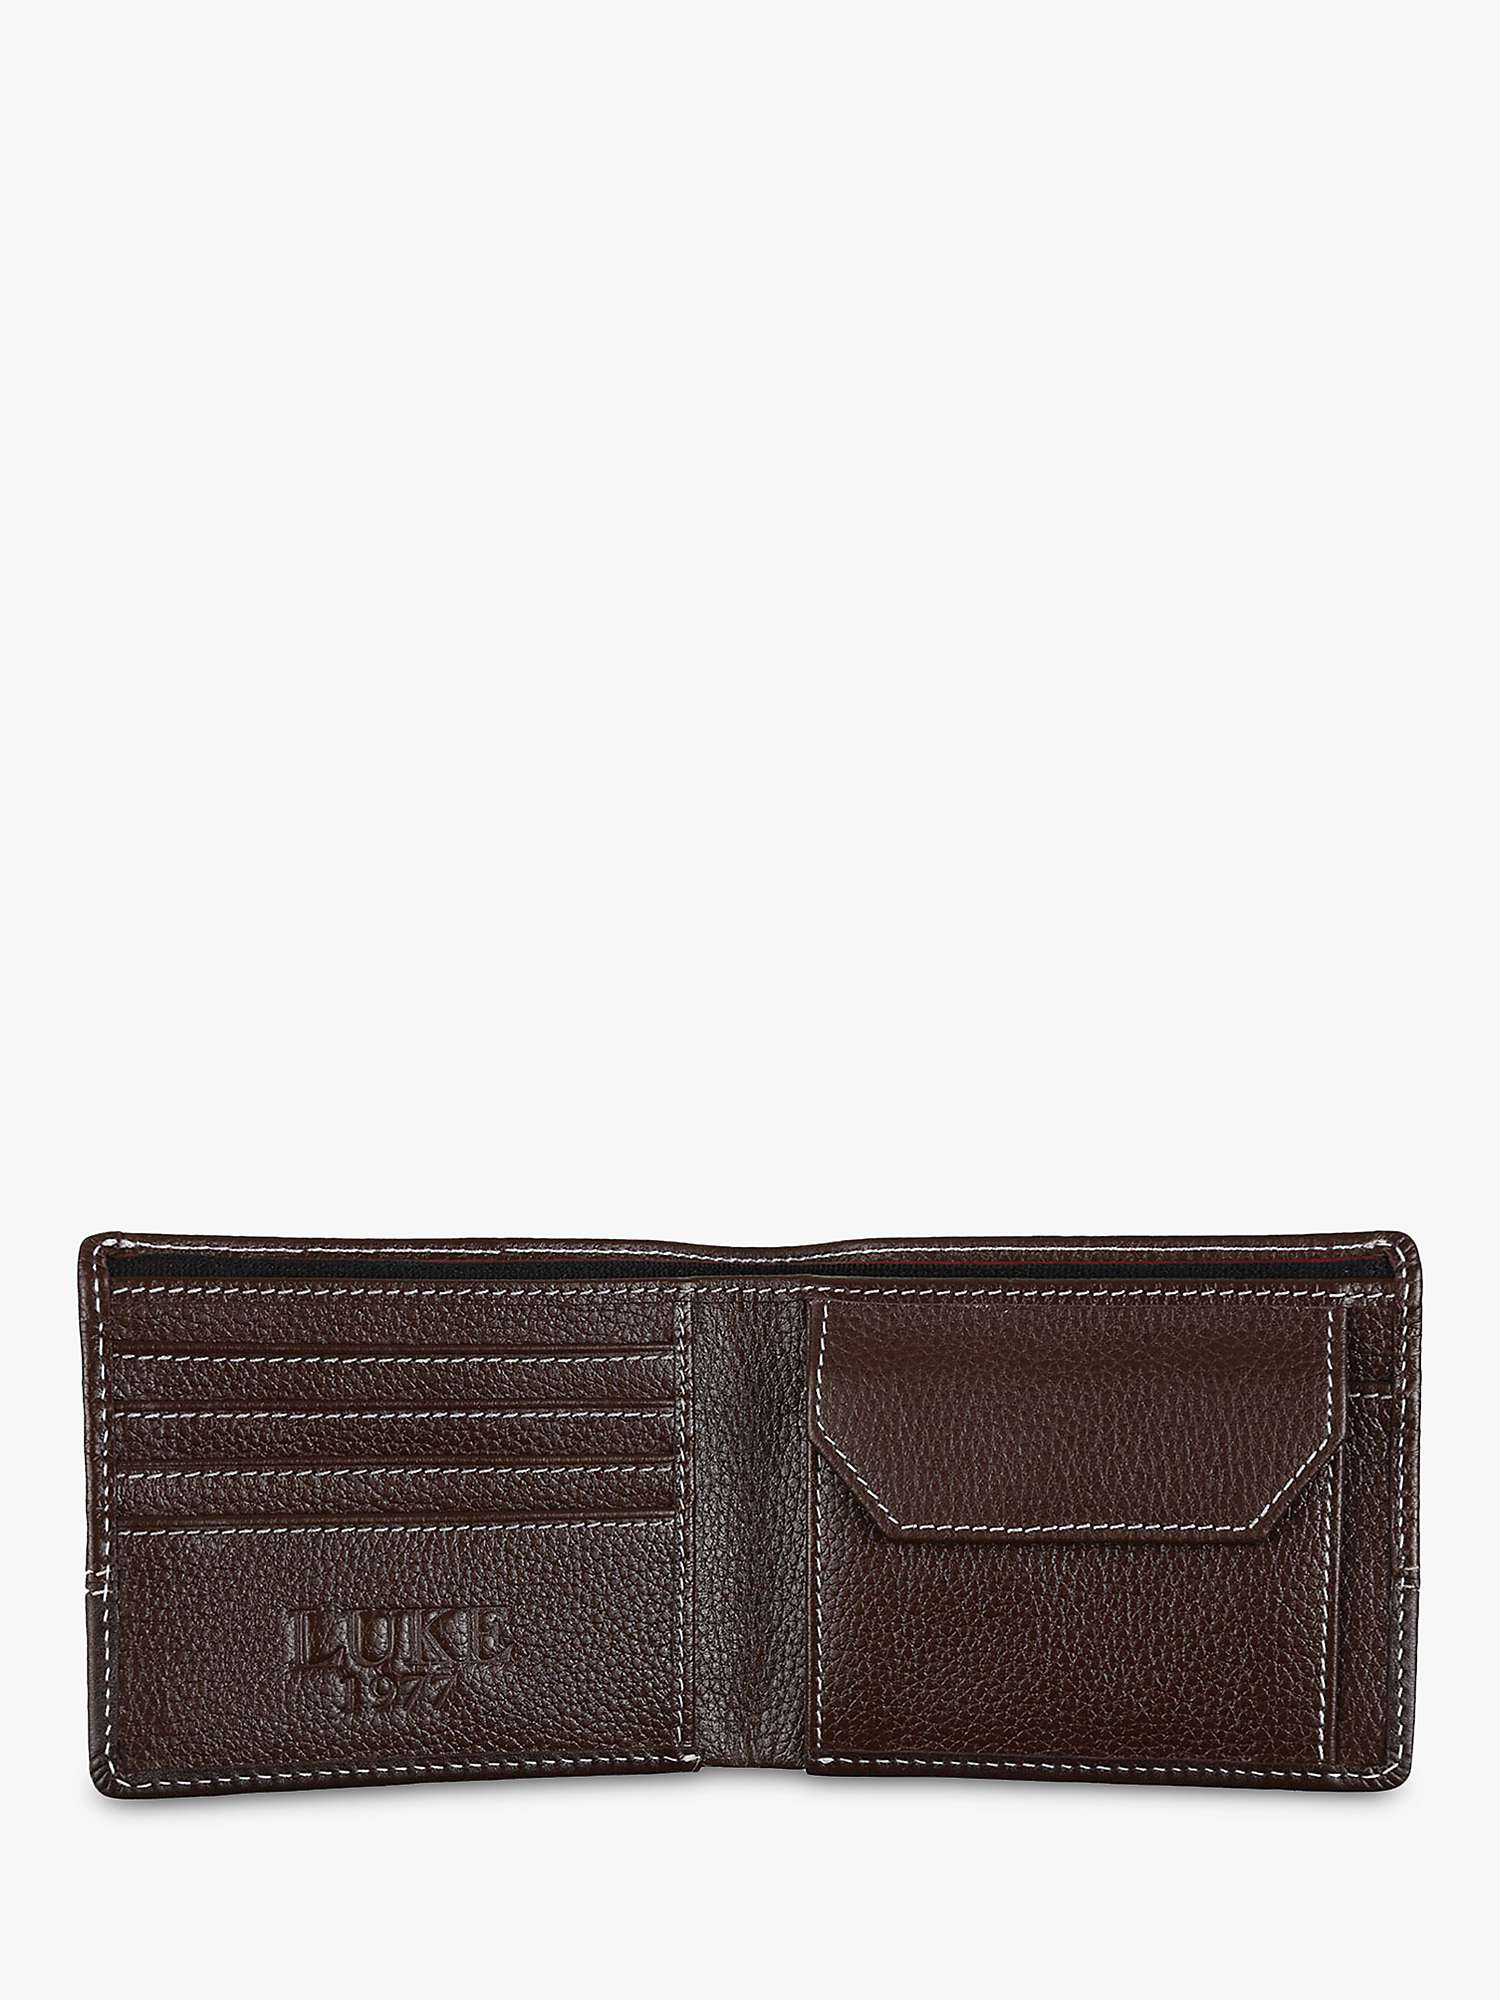 Buy LUKE 1977 Volcombe Leather Wallet Online at johnlewis.com